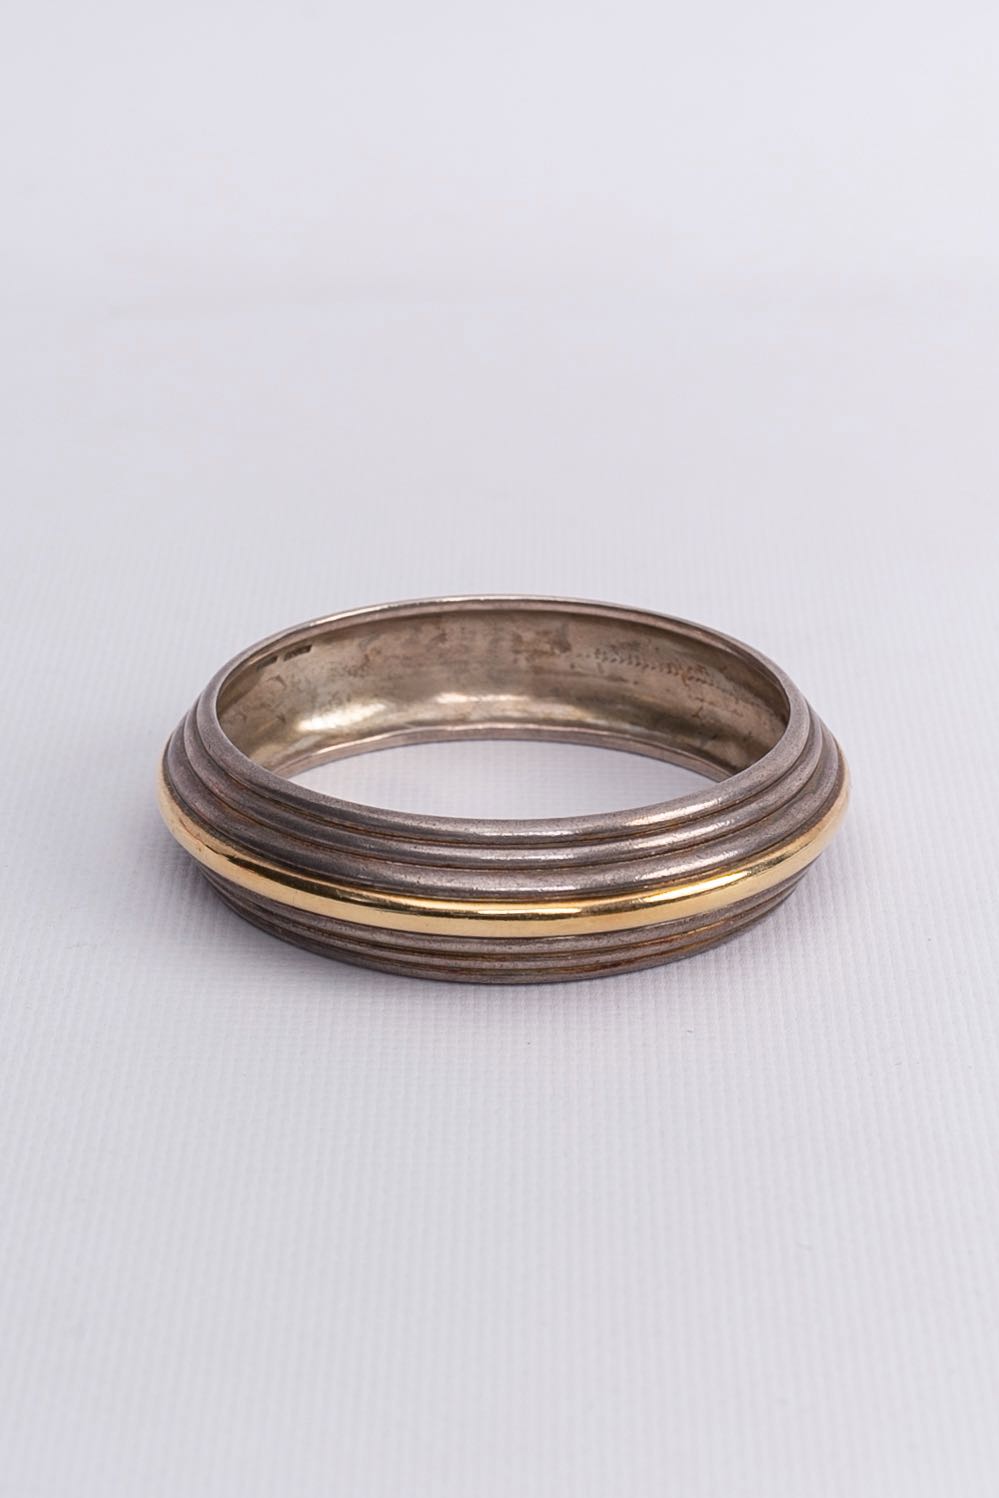 Hermès gold and silver bracelet